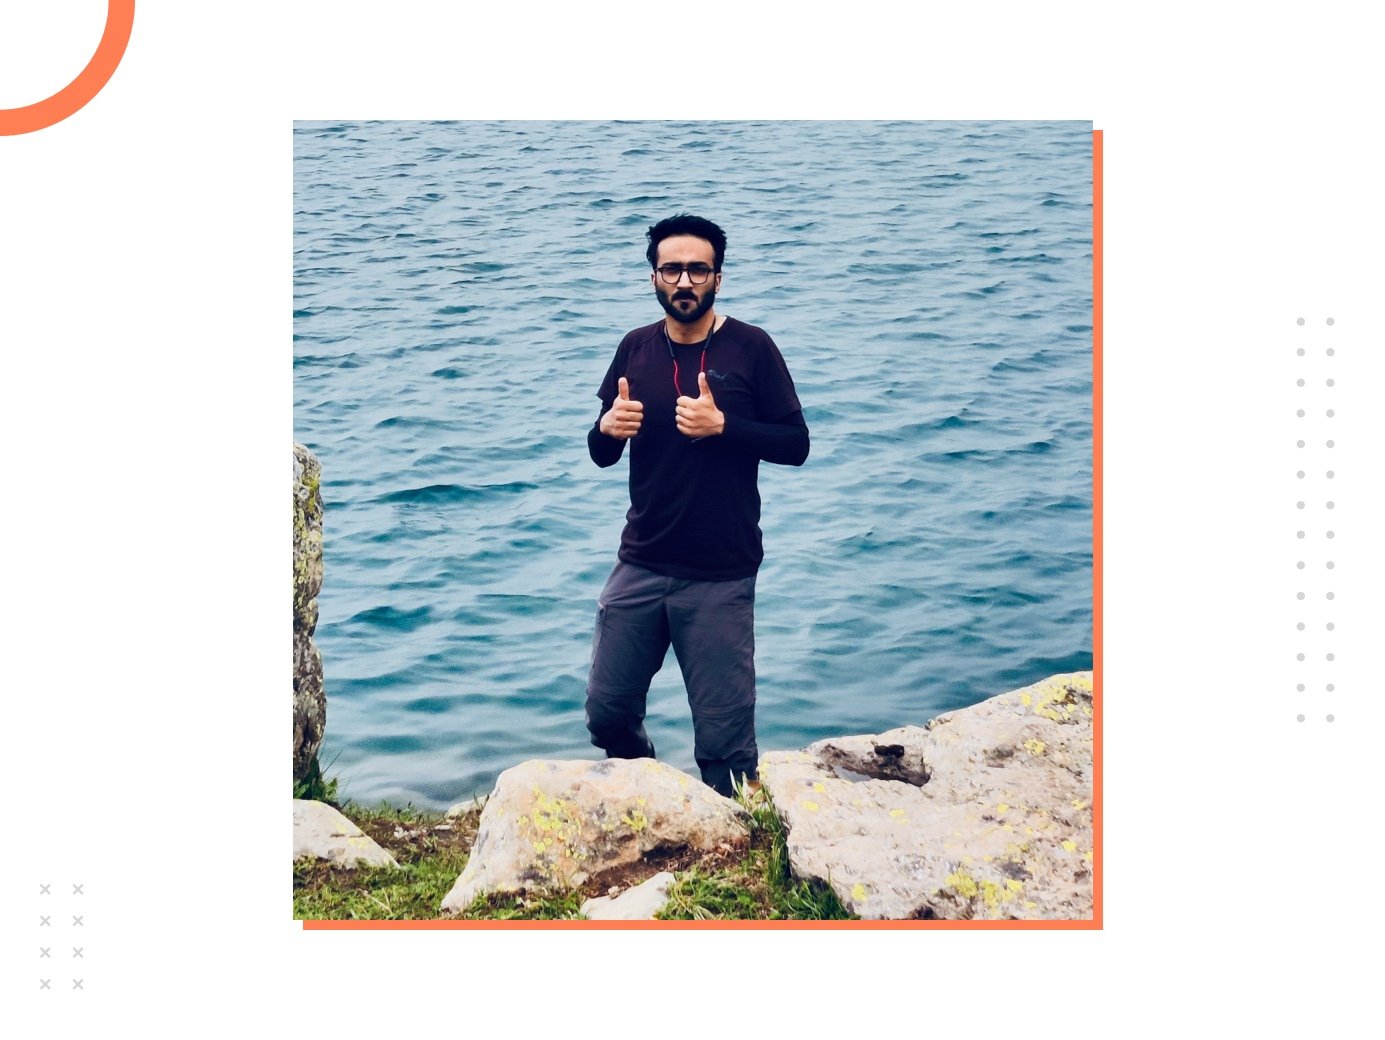 Hamid standing near a lake